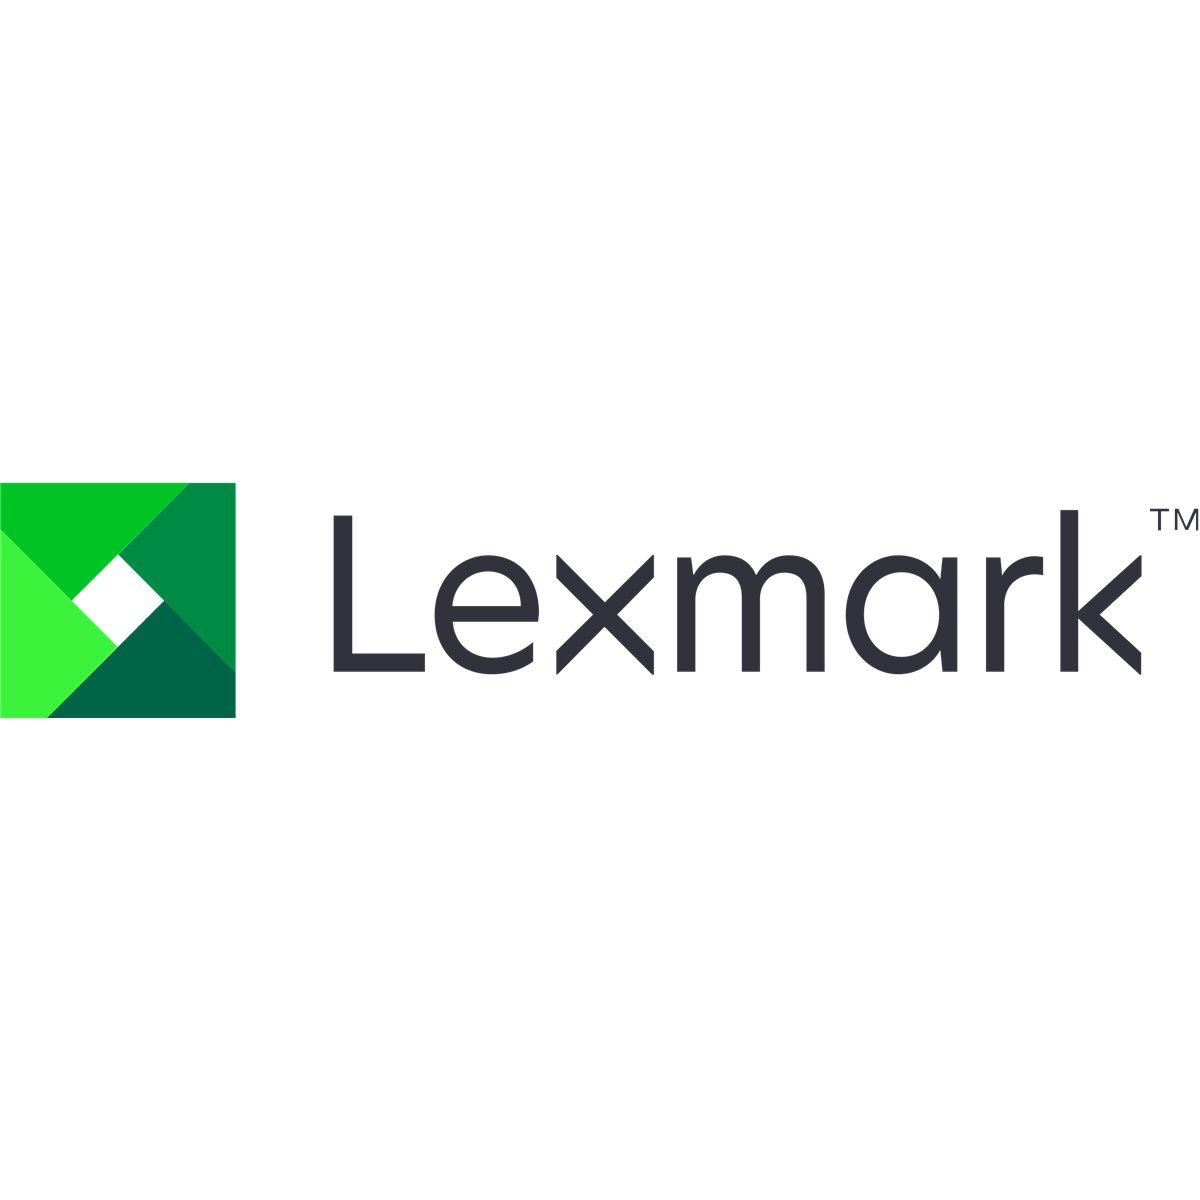 Lexmark Contactless Card Reader